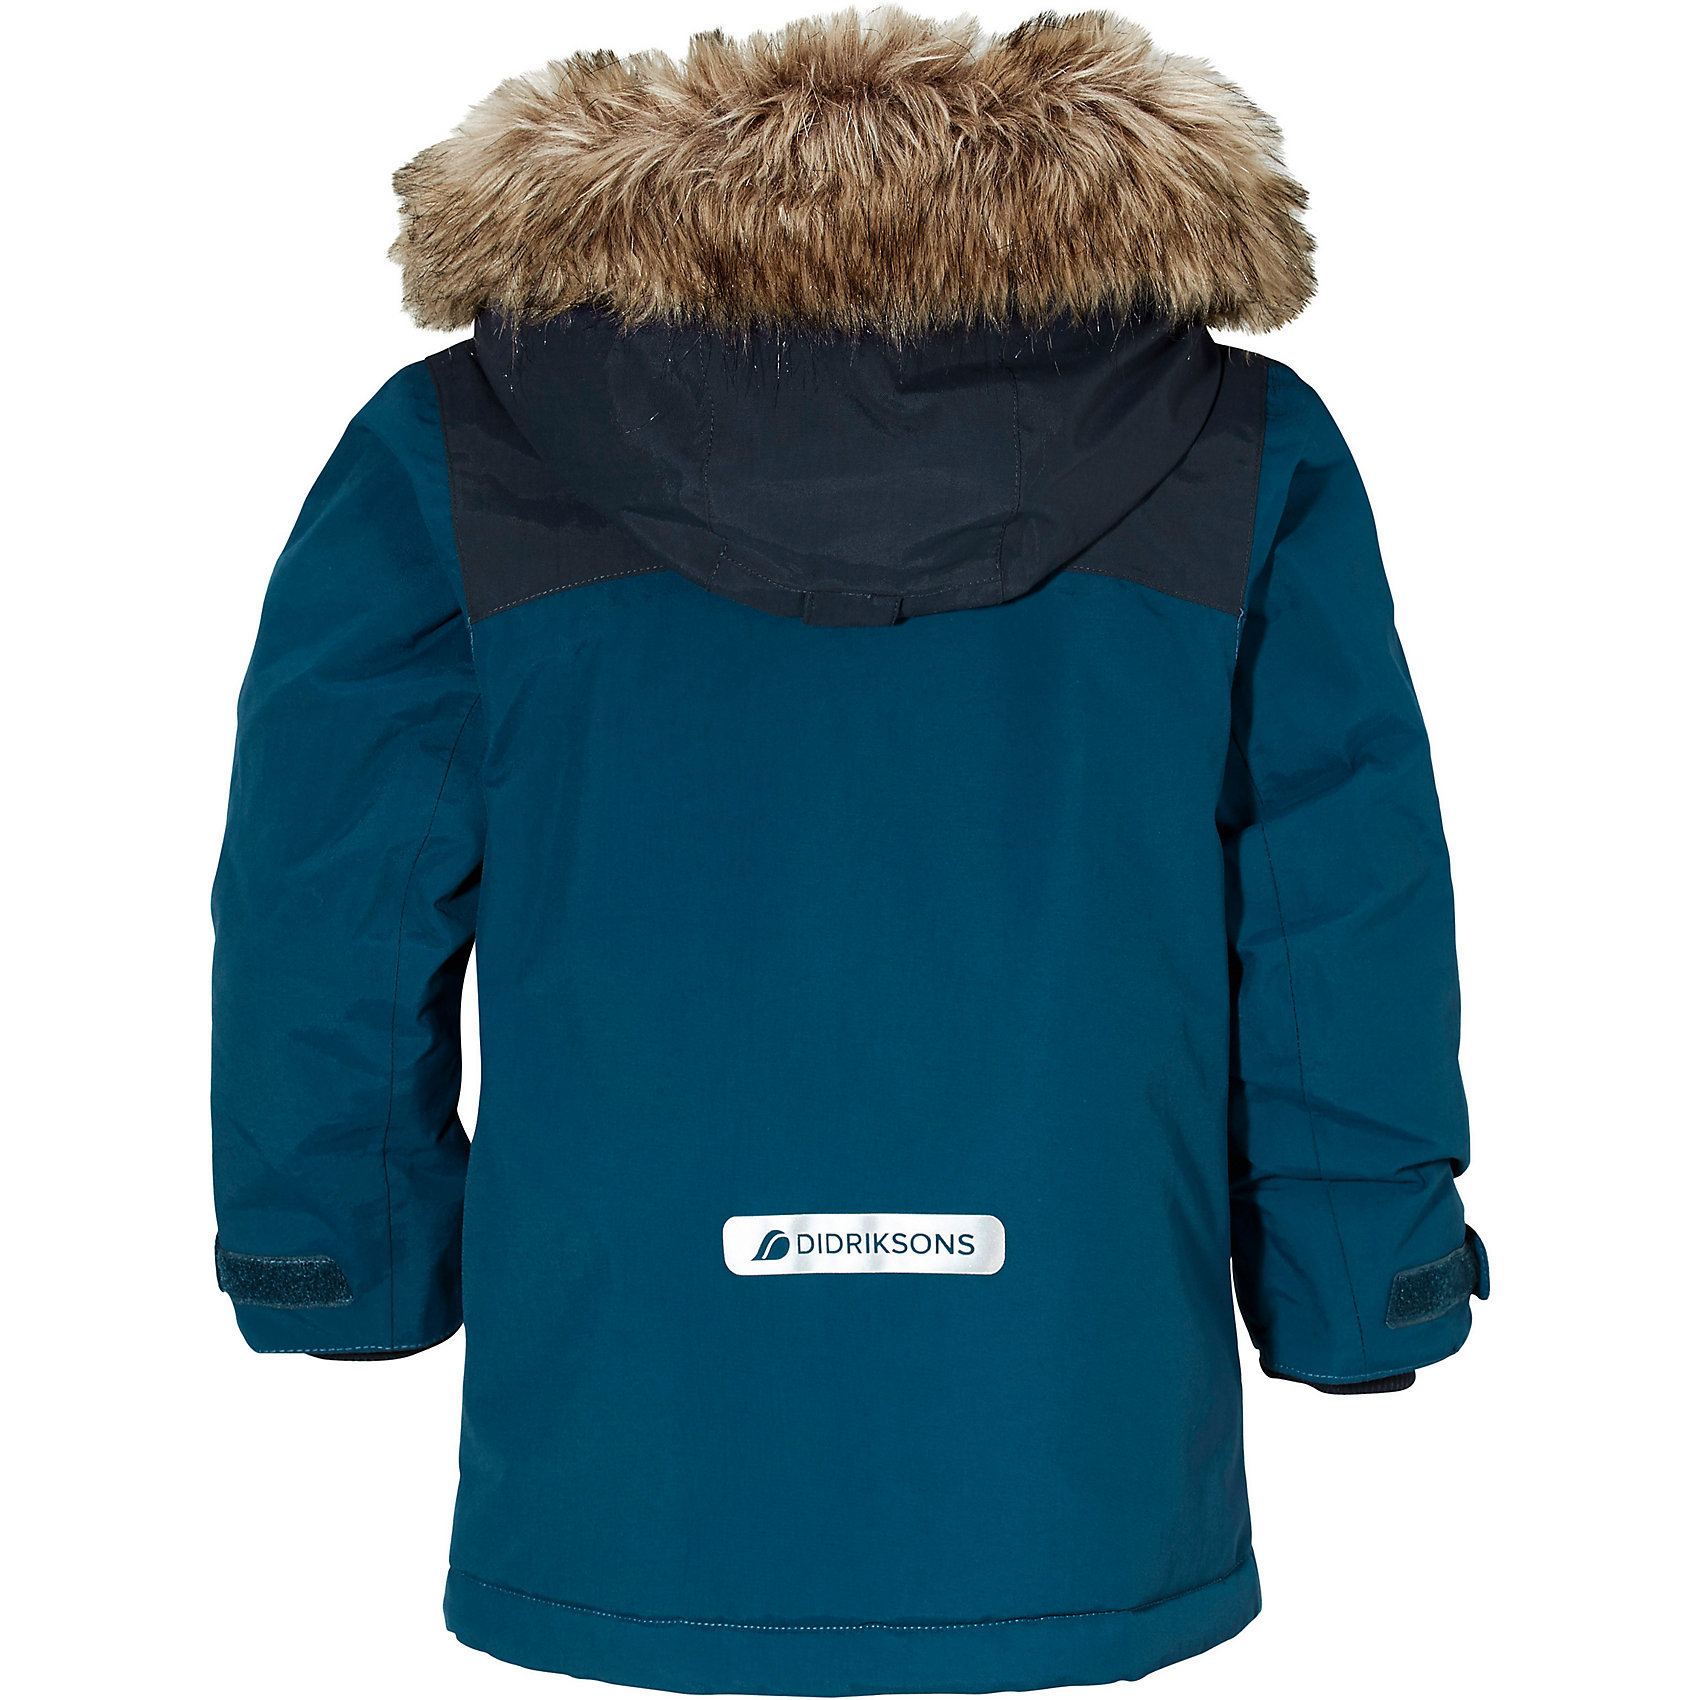 Утеплённая куртка s Kure DIDRIKSON 12464430